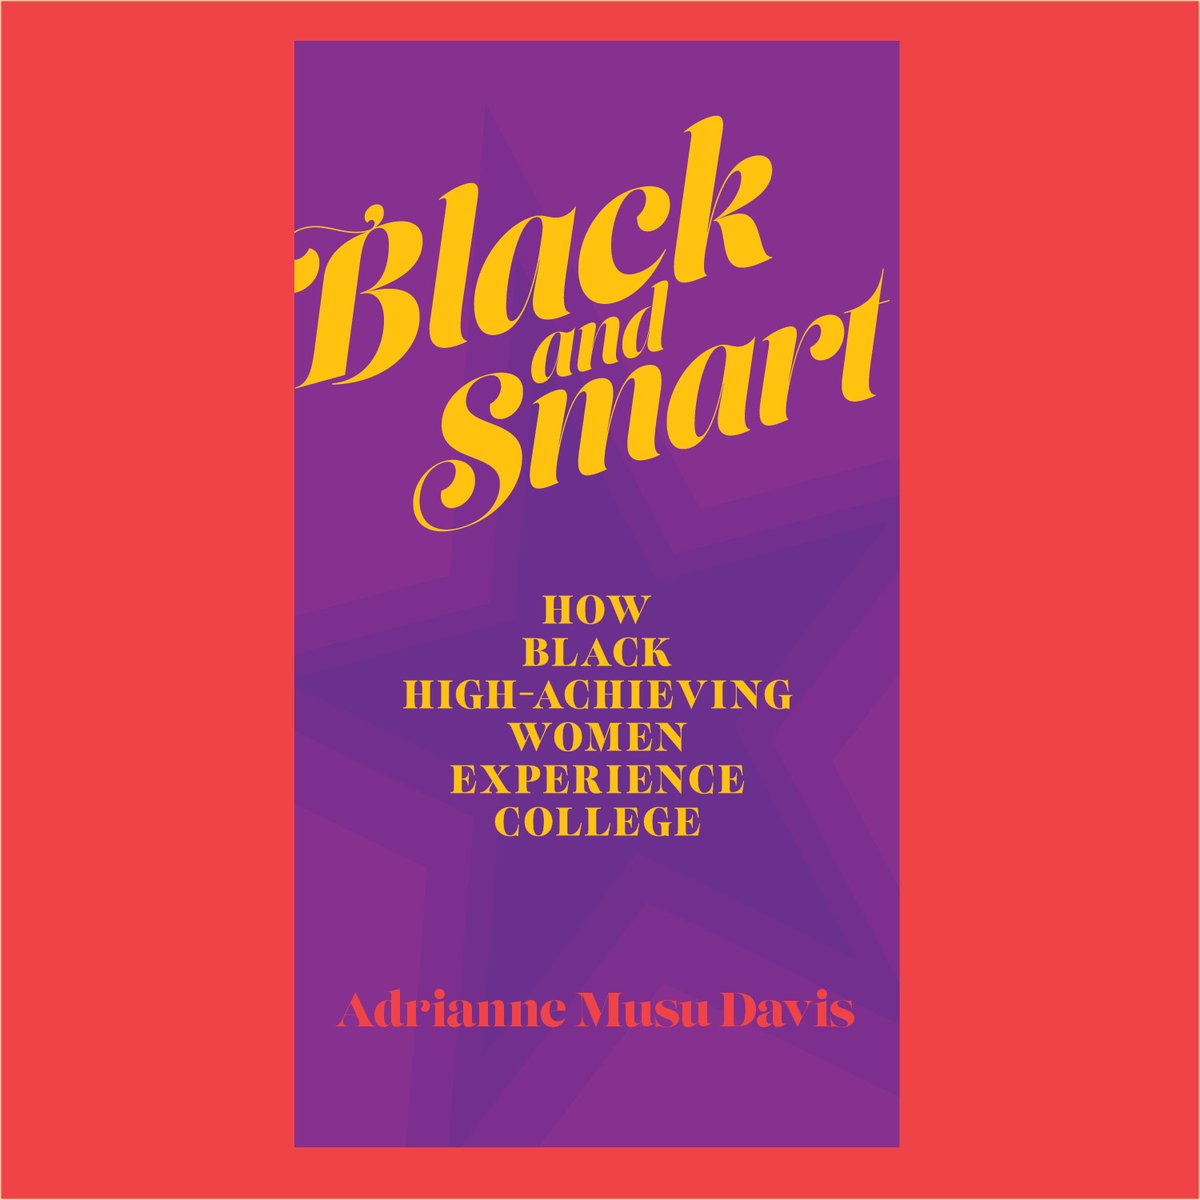 “Black and Smart: How Black High-Achieving Women Experience College”
by Adrianne Musu Davis

rutgersuniversitypress.org/black-and-smar…

#NewBookAnnouncement #RaceStudies #GenderStudies